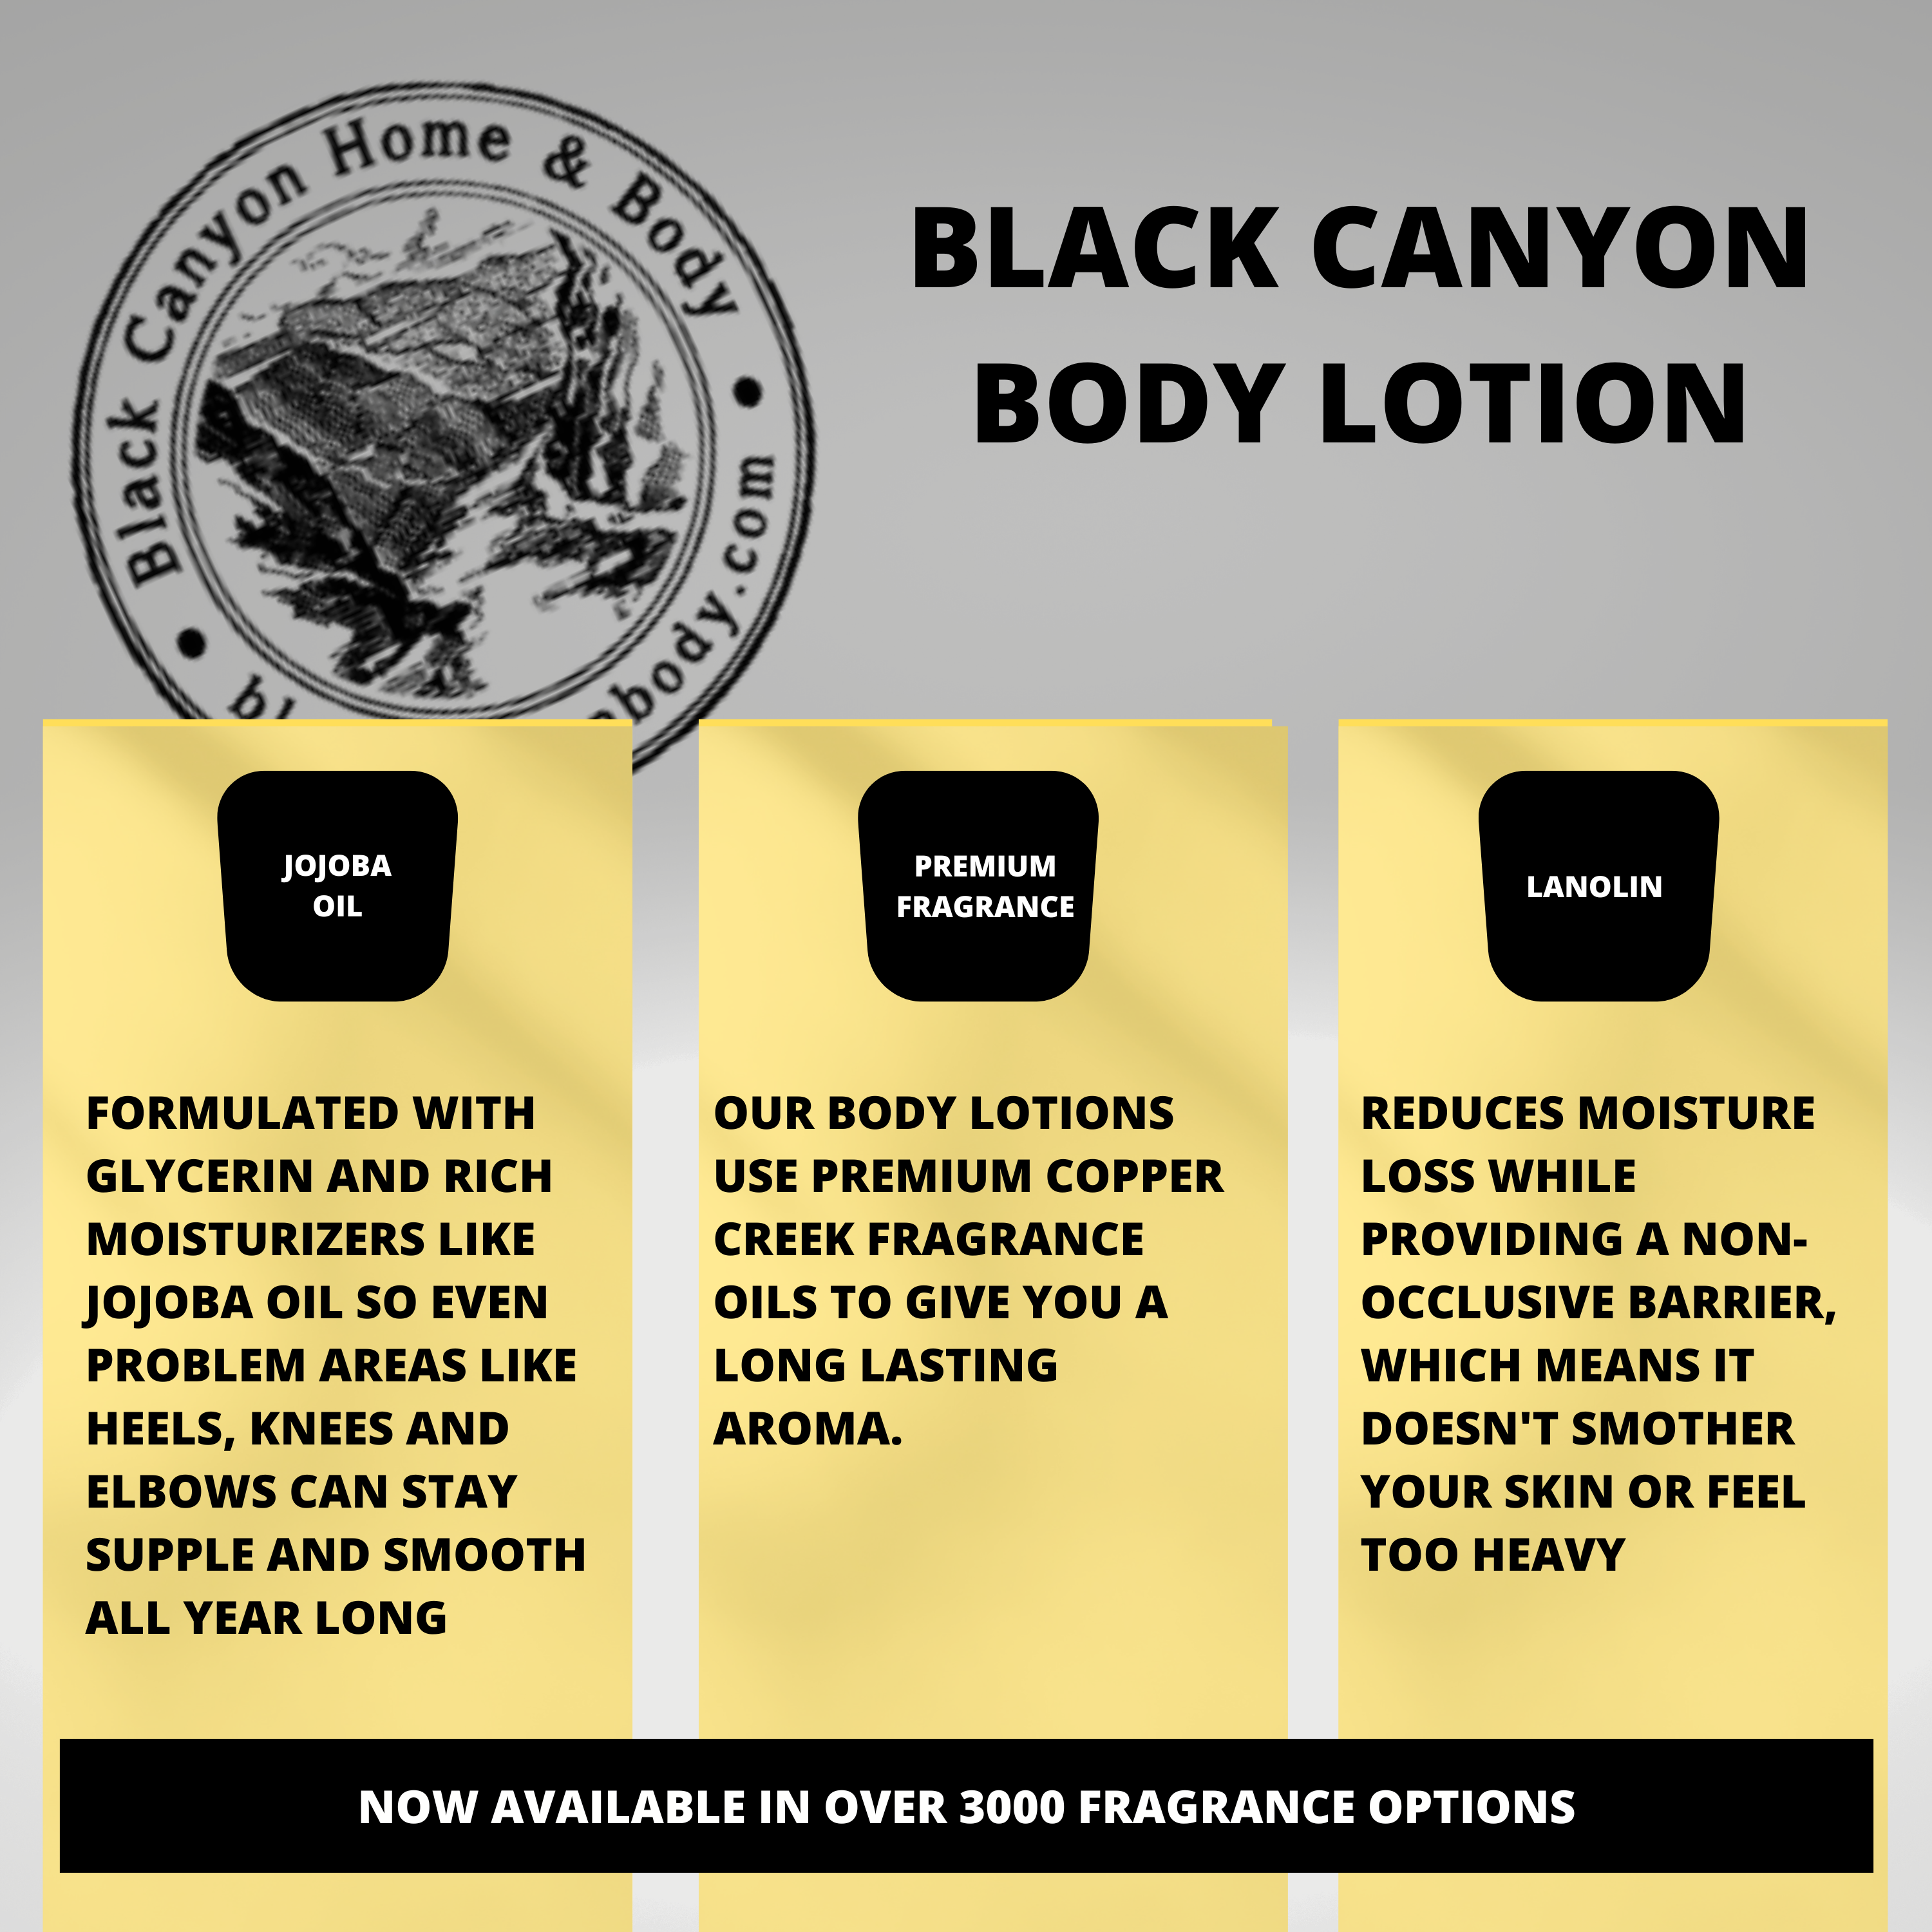 Black Canyon Creamy Vanilla Hazelnut Scented Luxury Body Lotion with Lanolin and Jojoba Oil